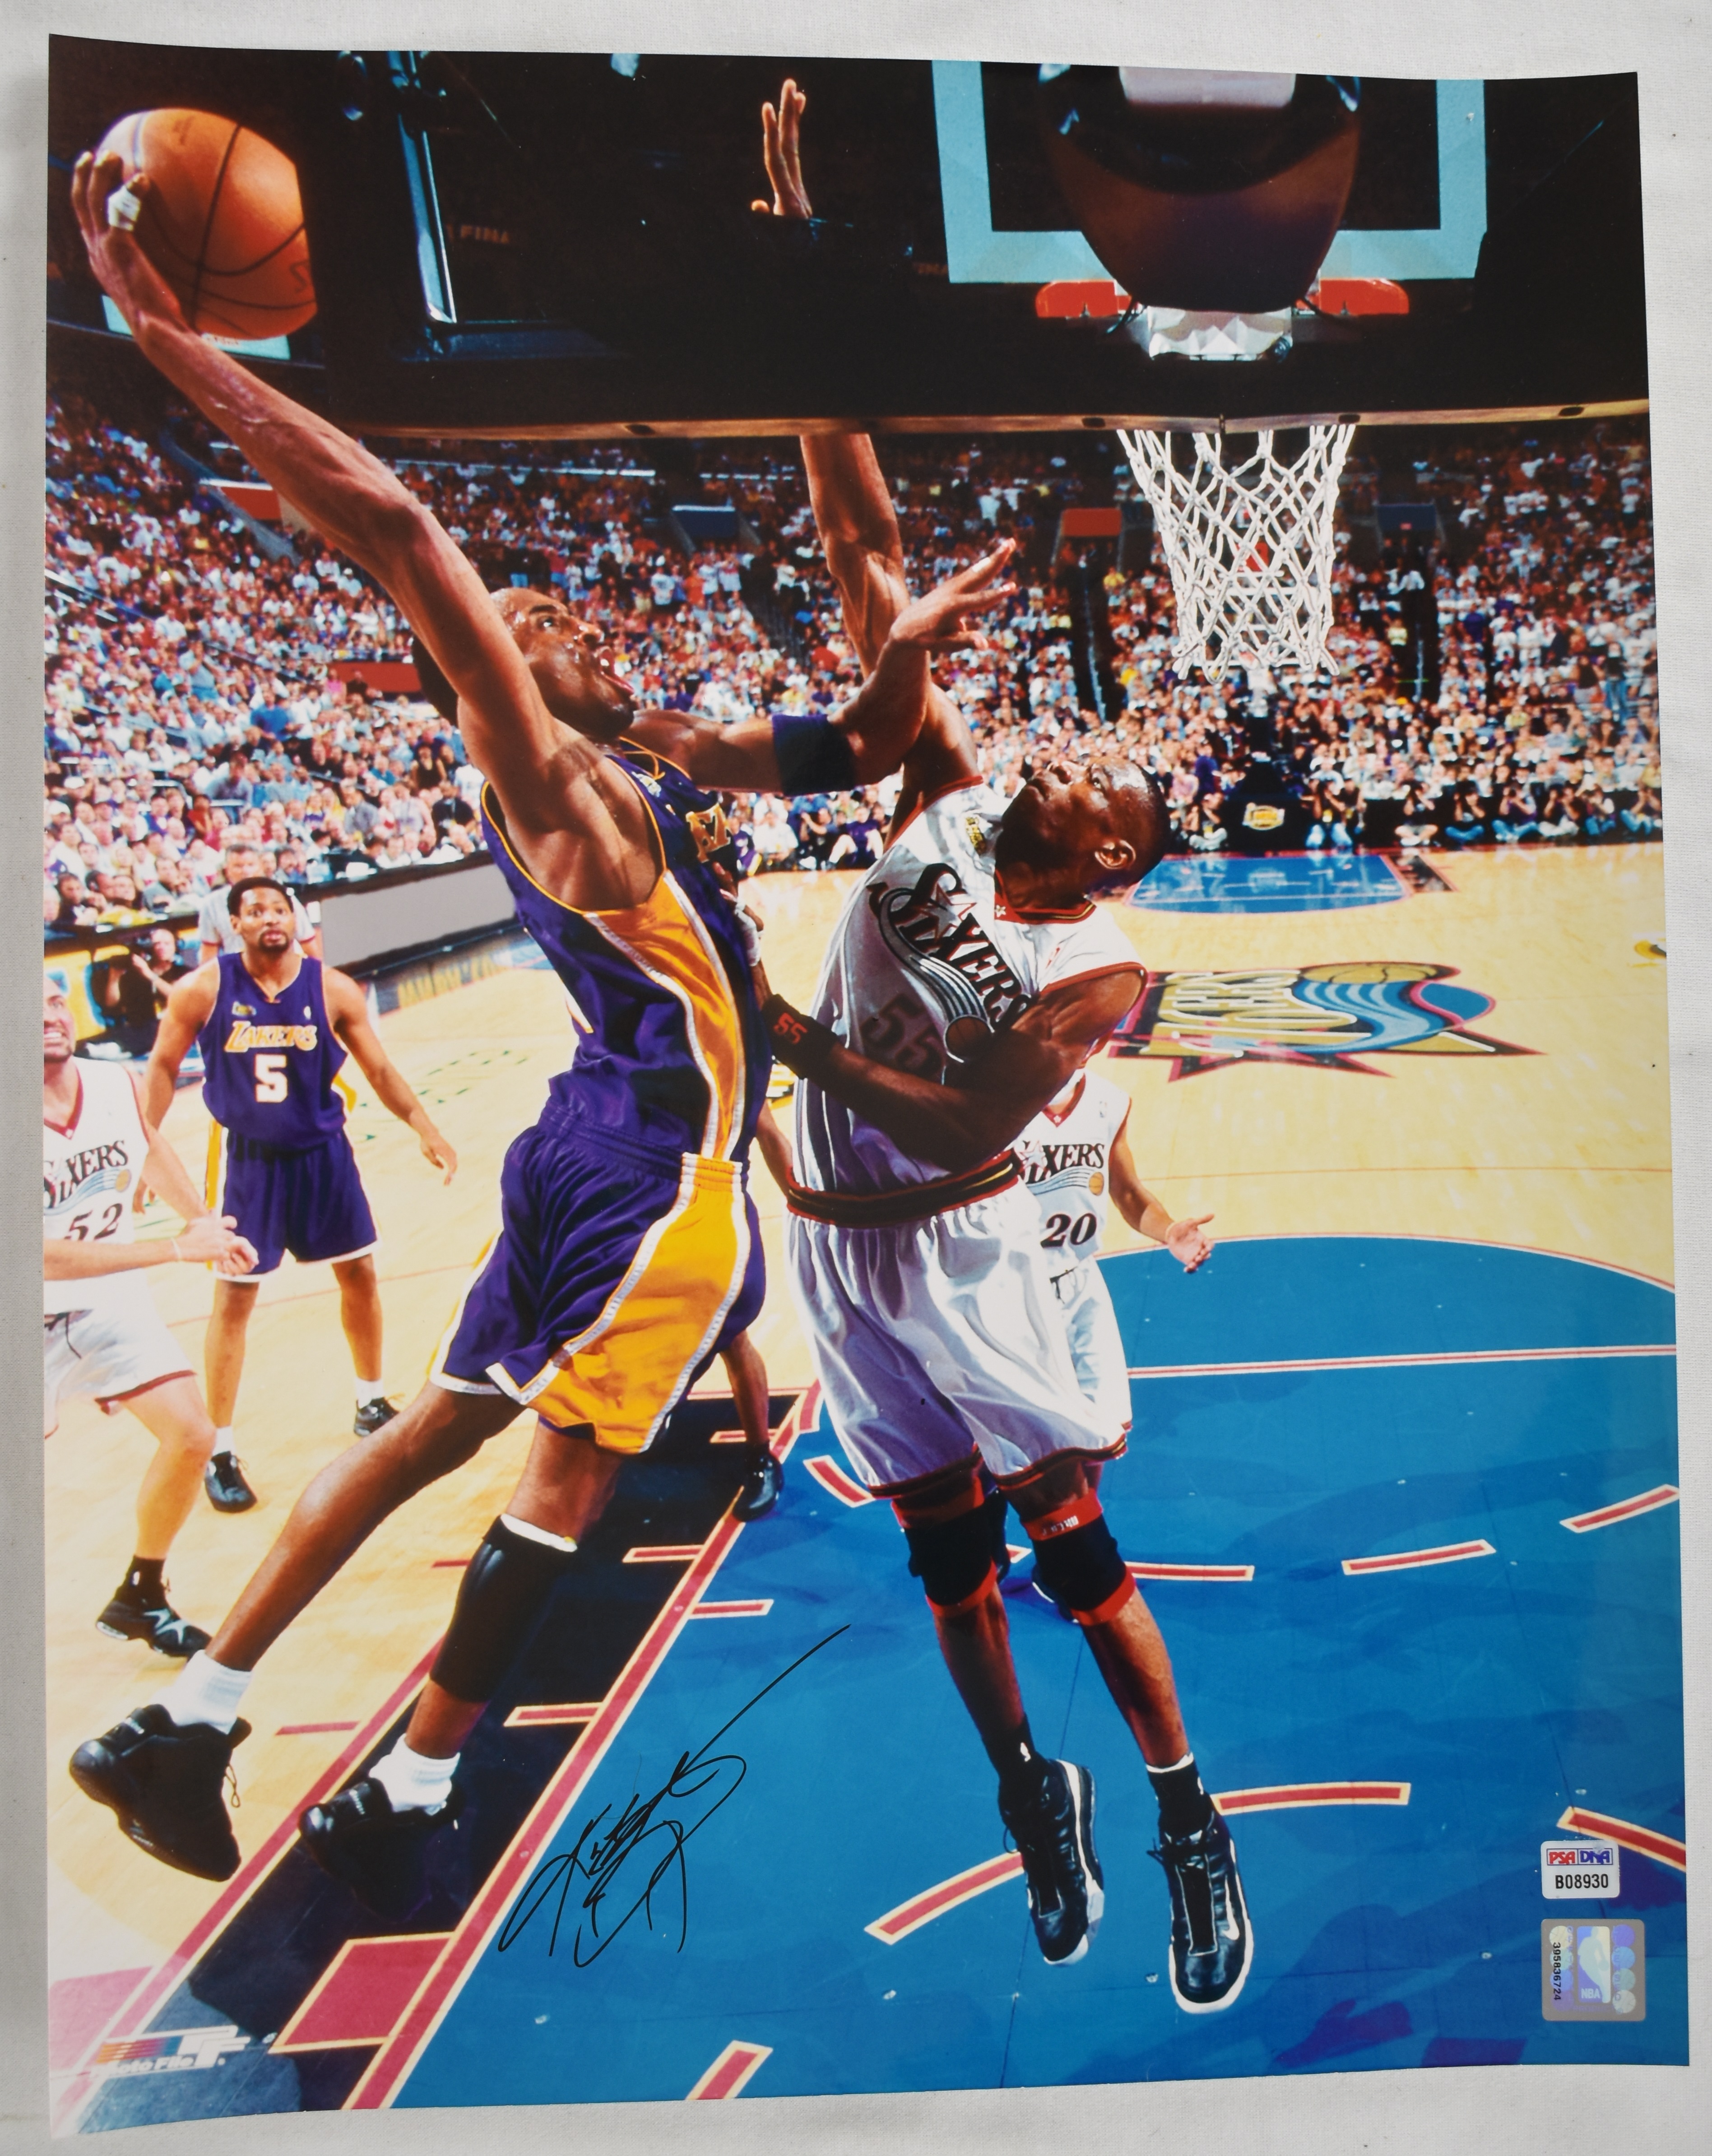 NBA Finals Archive — Kobe Bryant 2001 NBA Finals